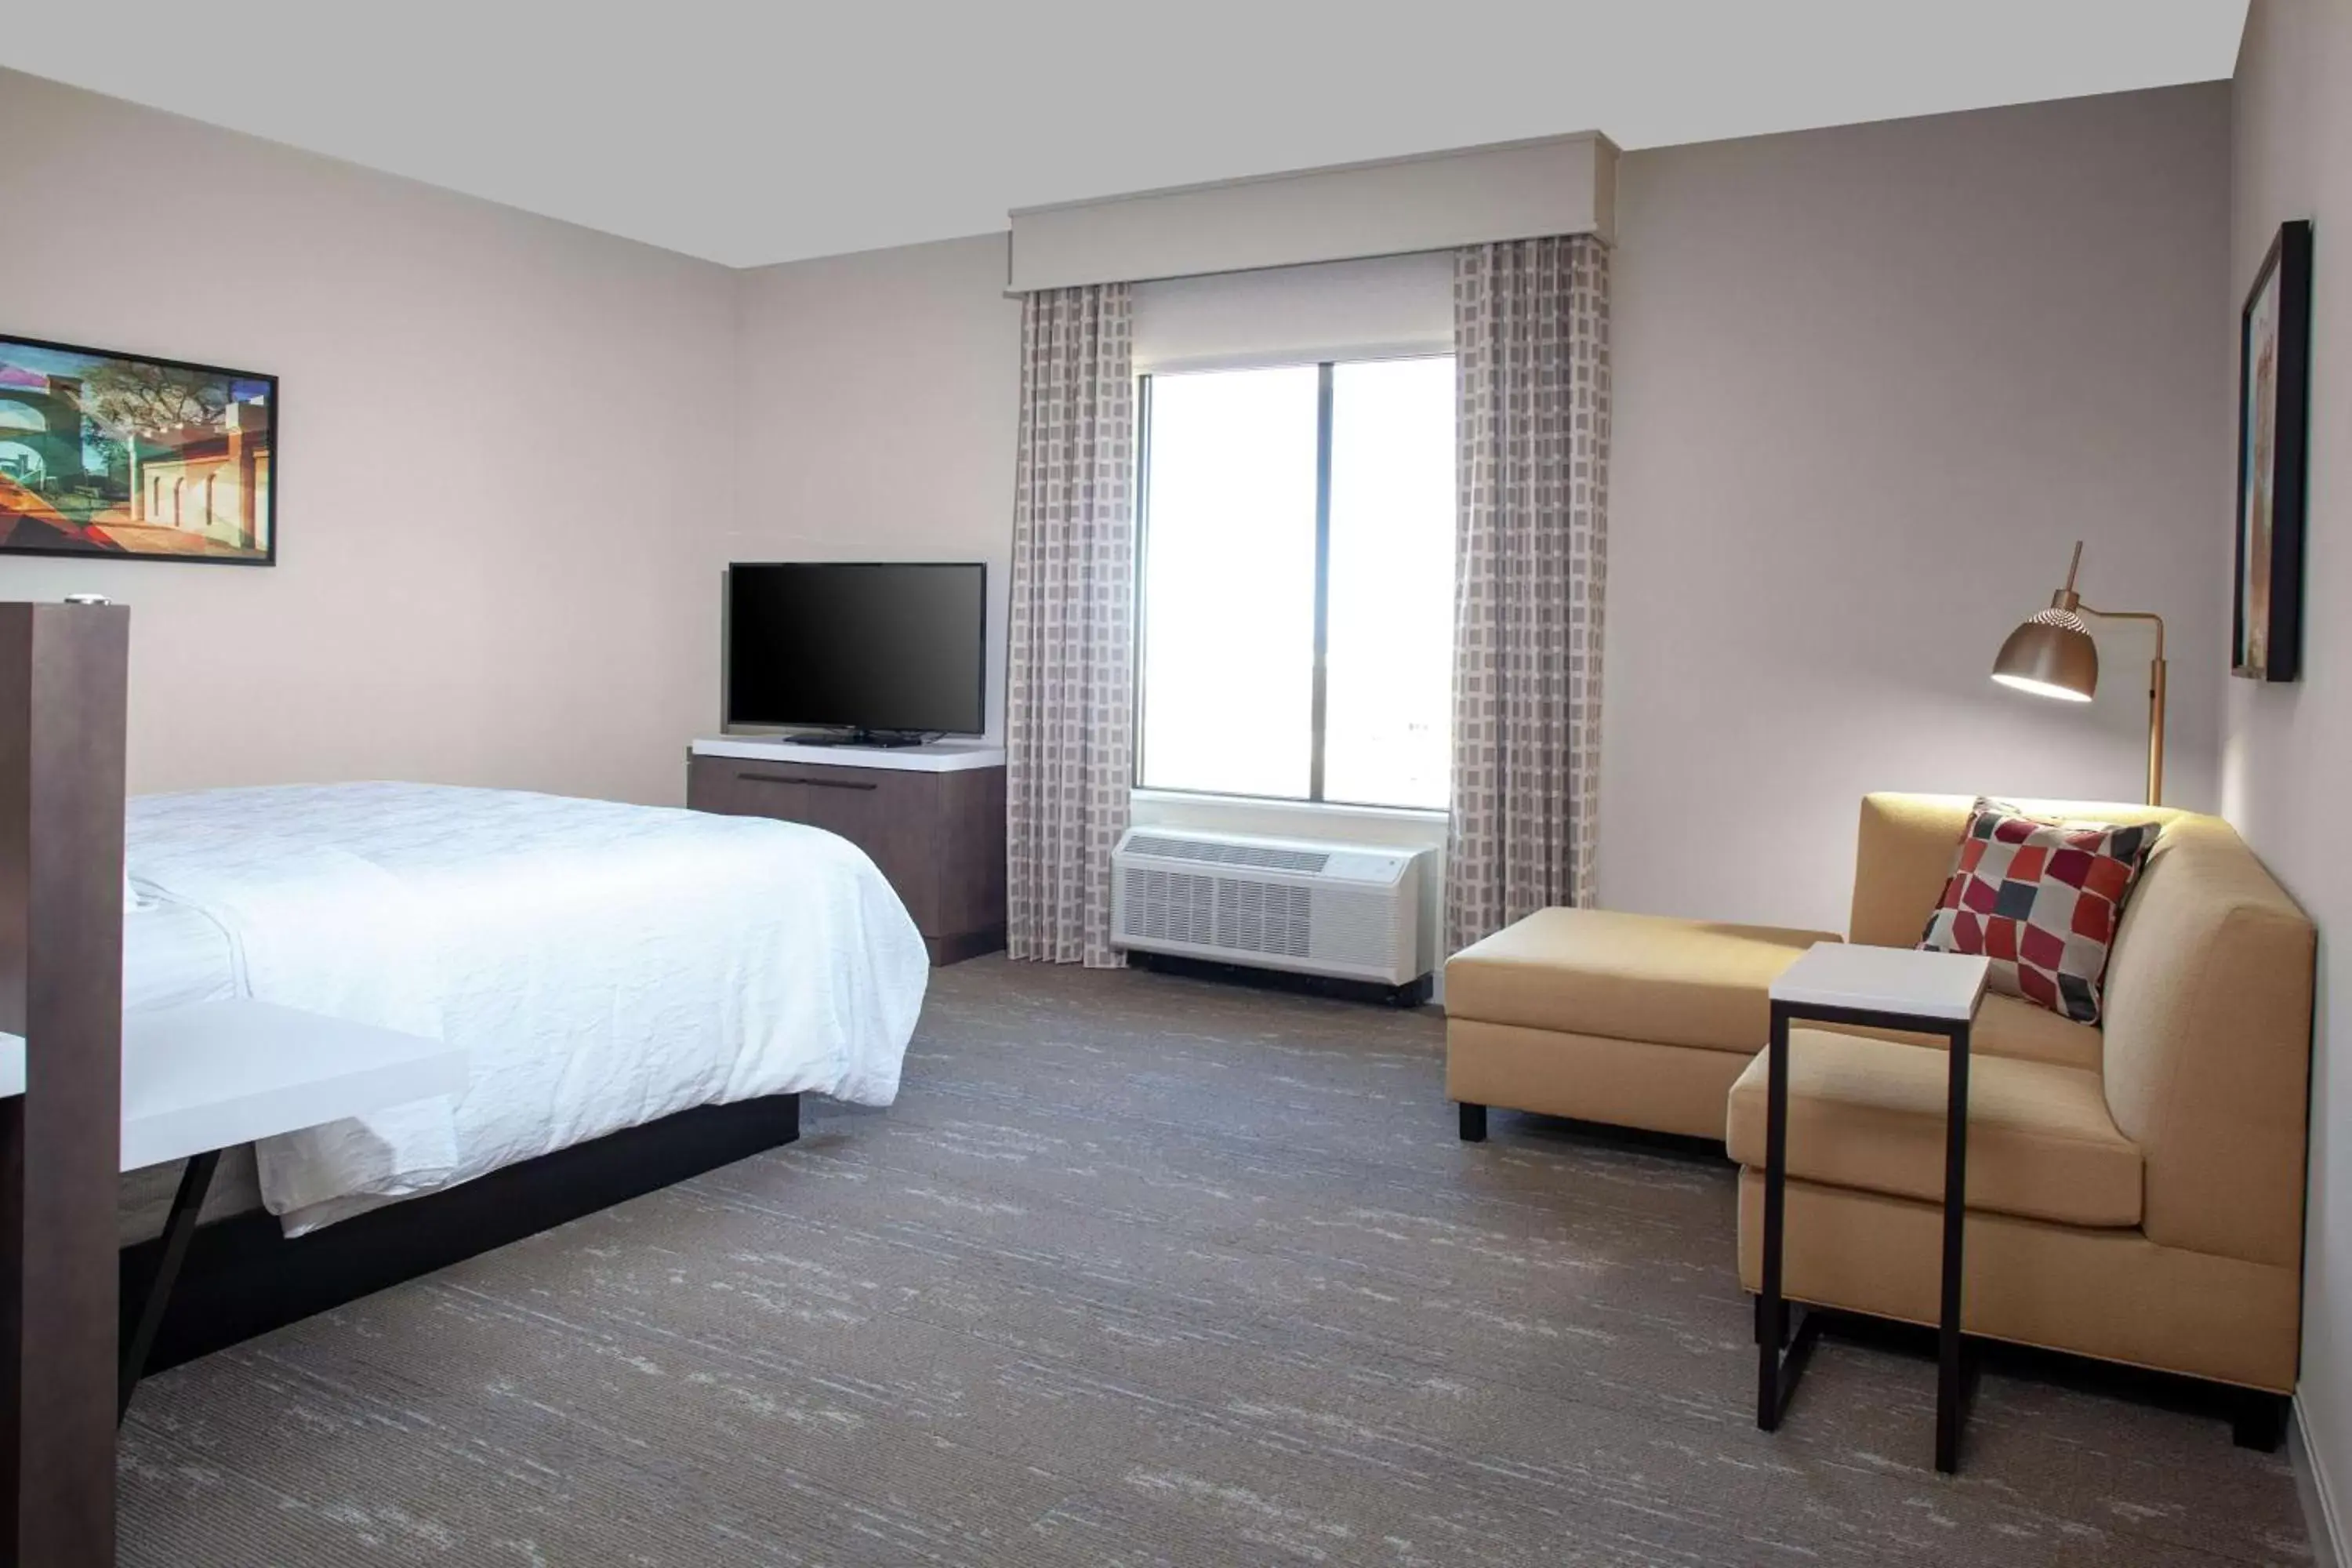 Bedroom in Hilton Garden Inn Waco